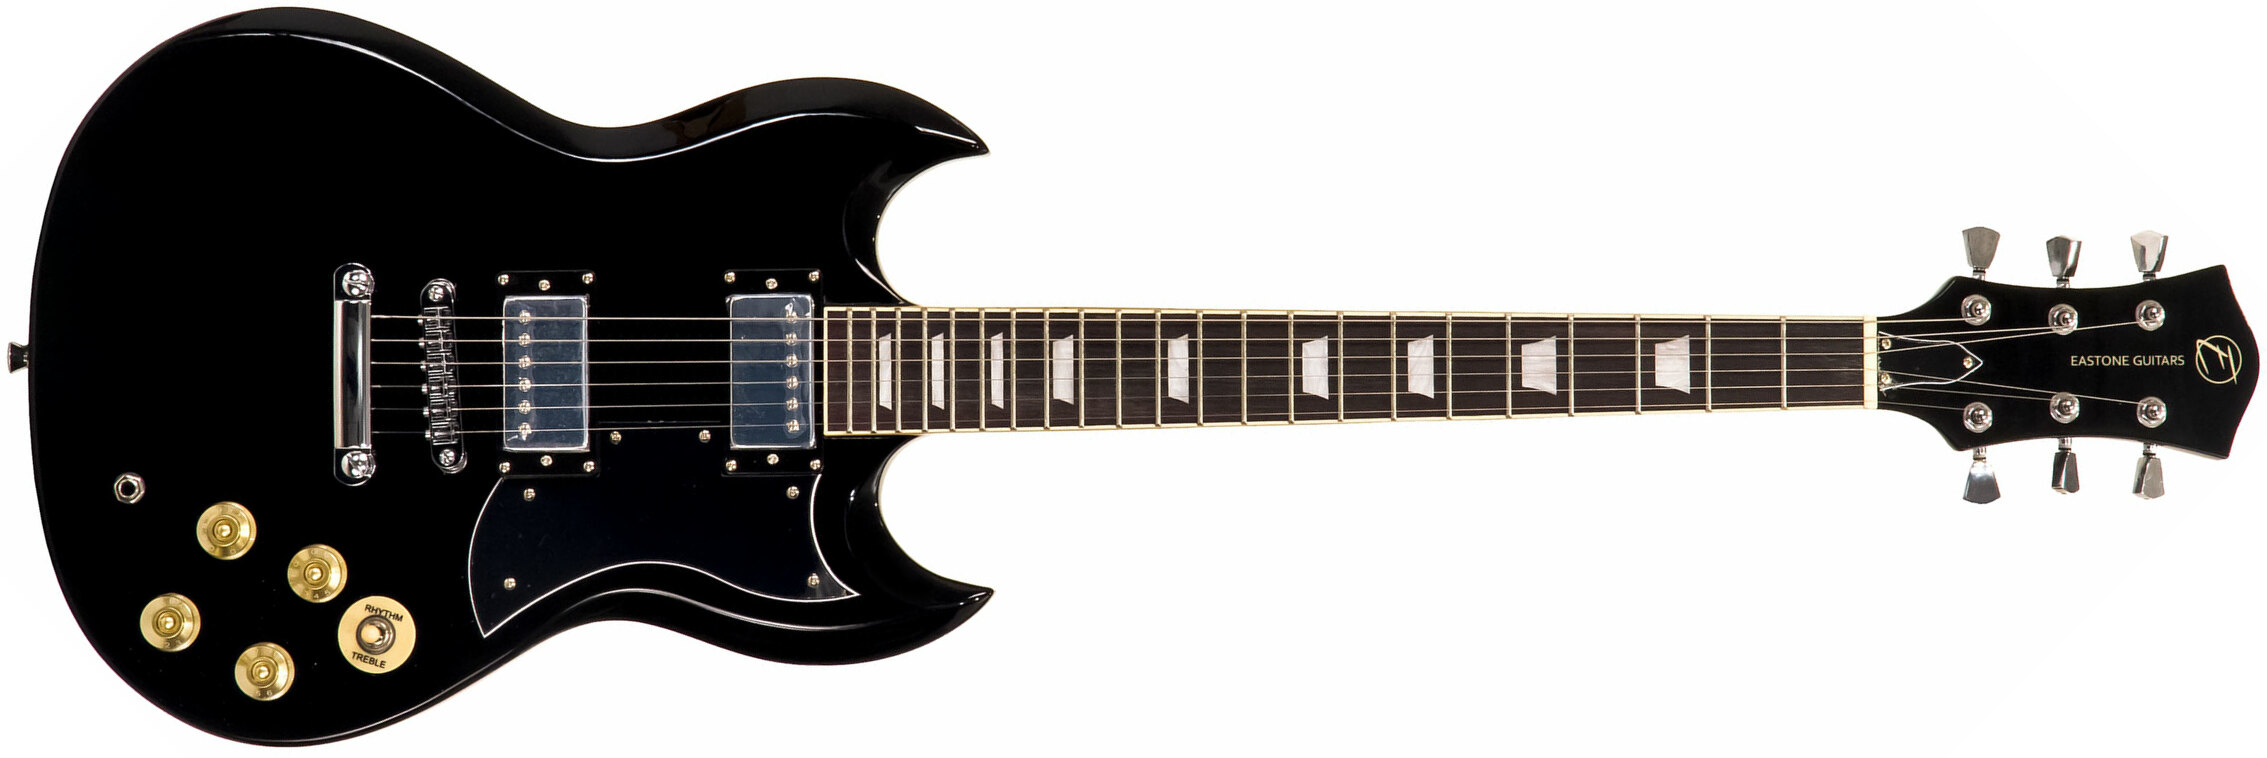 Eastone Sdc70 Hh Ht Pur - Black - Retro-rock elektrische gitaar - Main picture